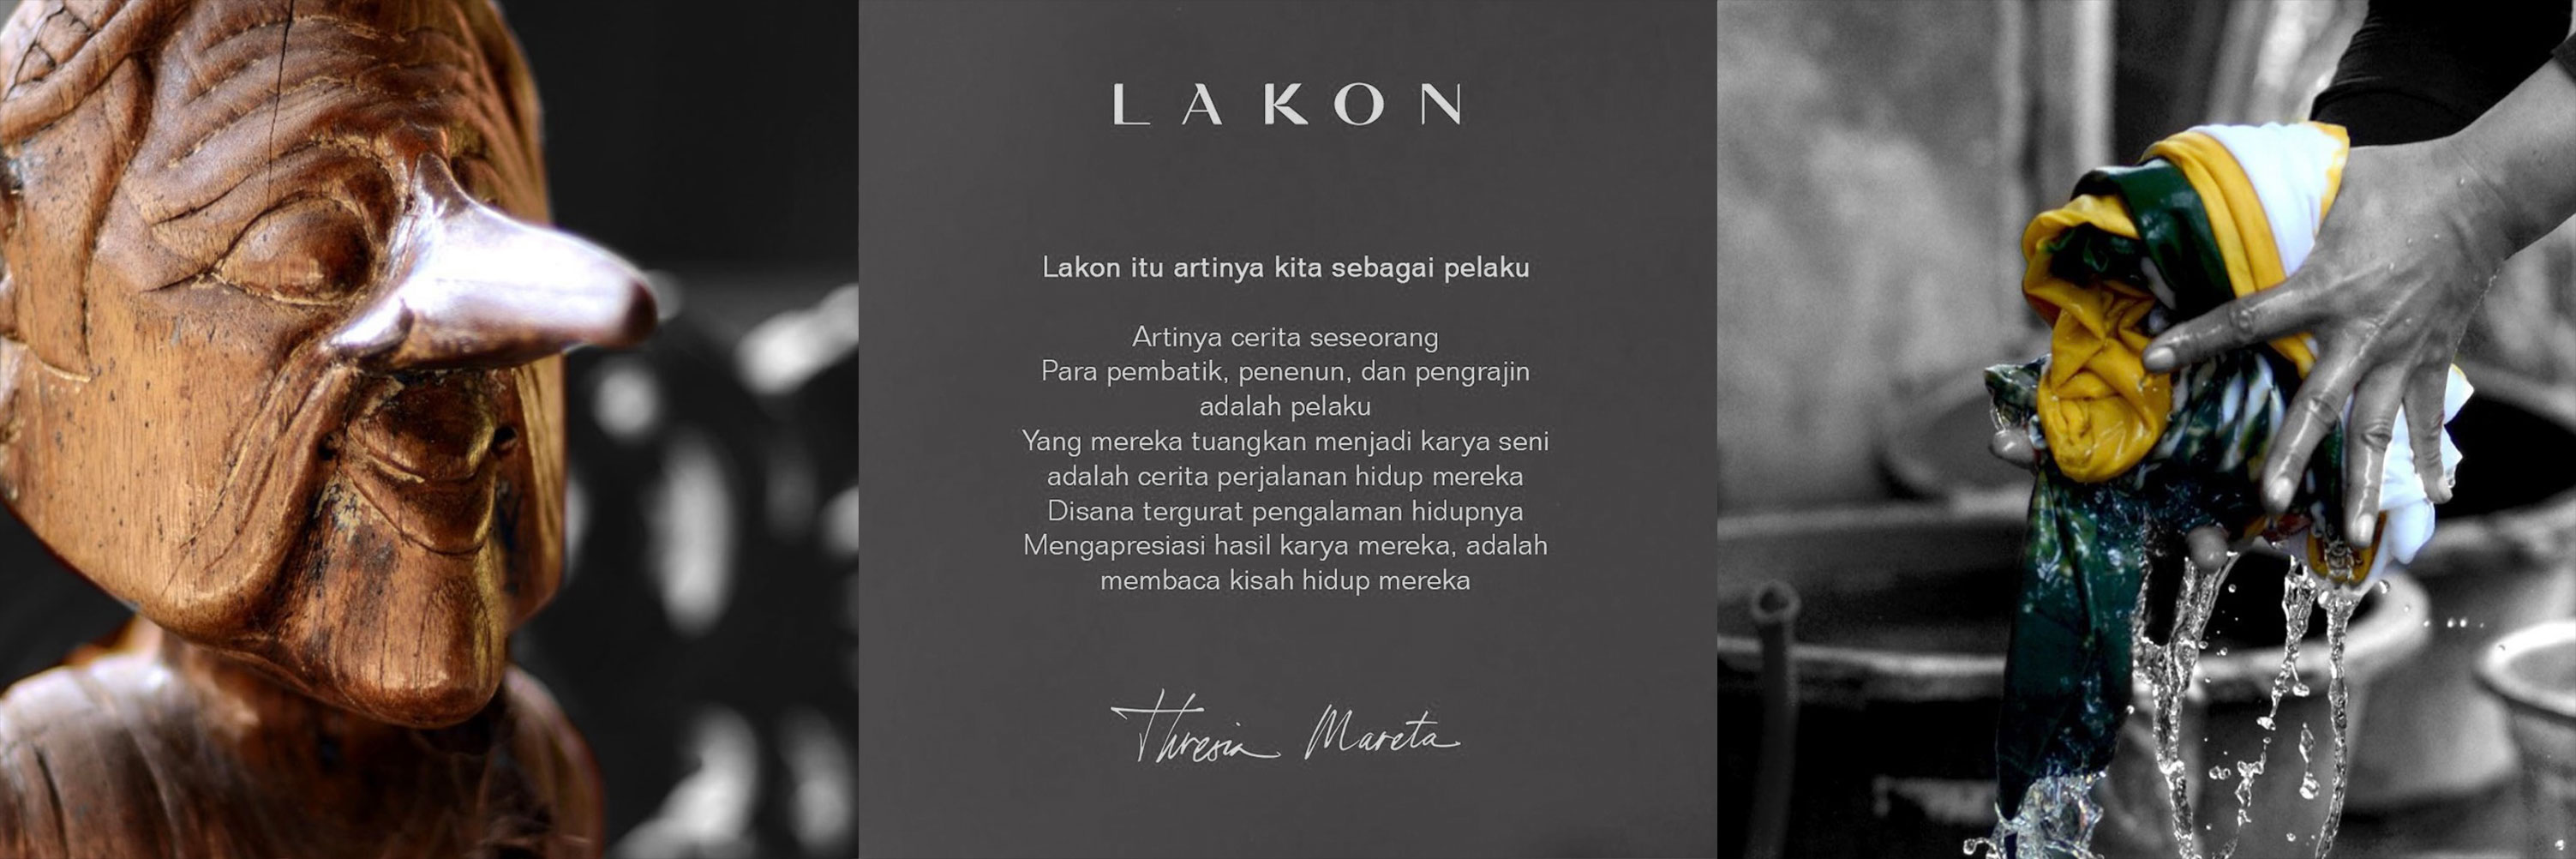 True Meaning of LAKON image